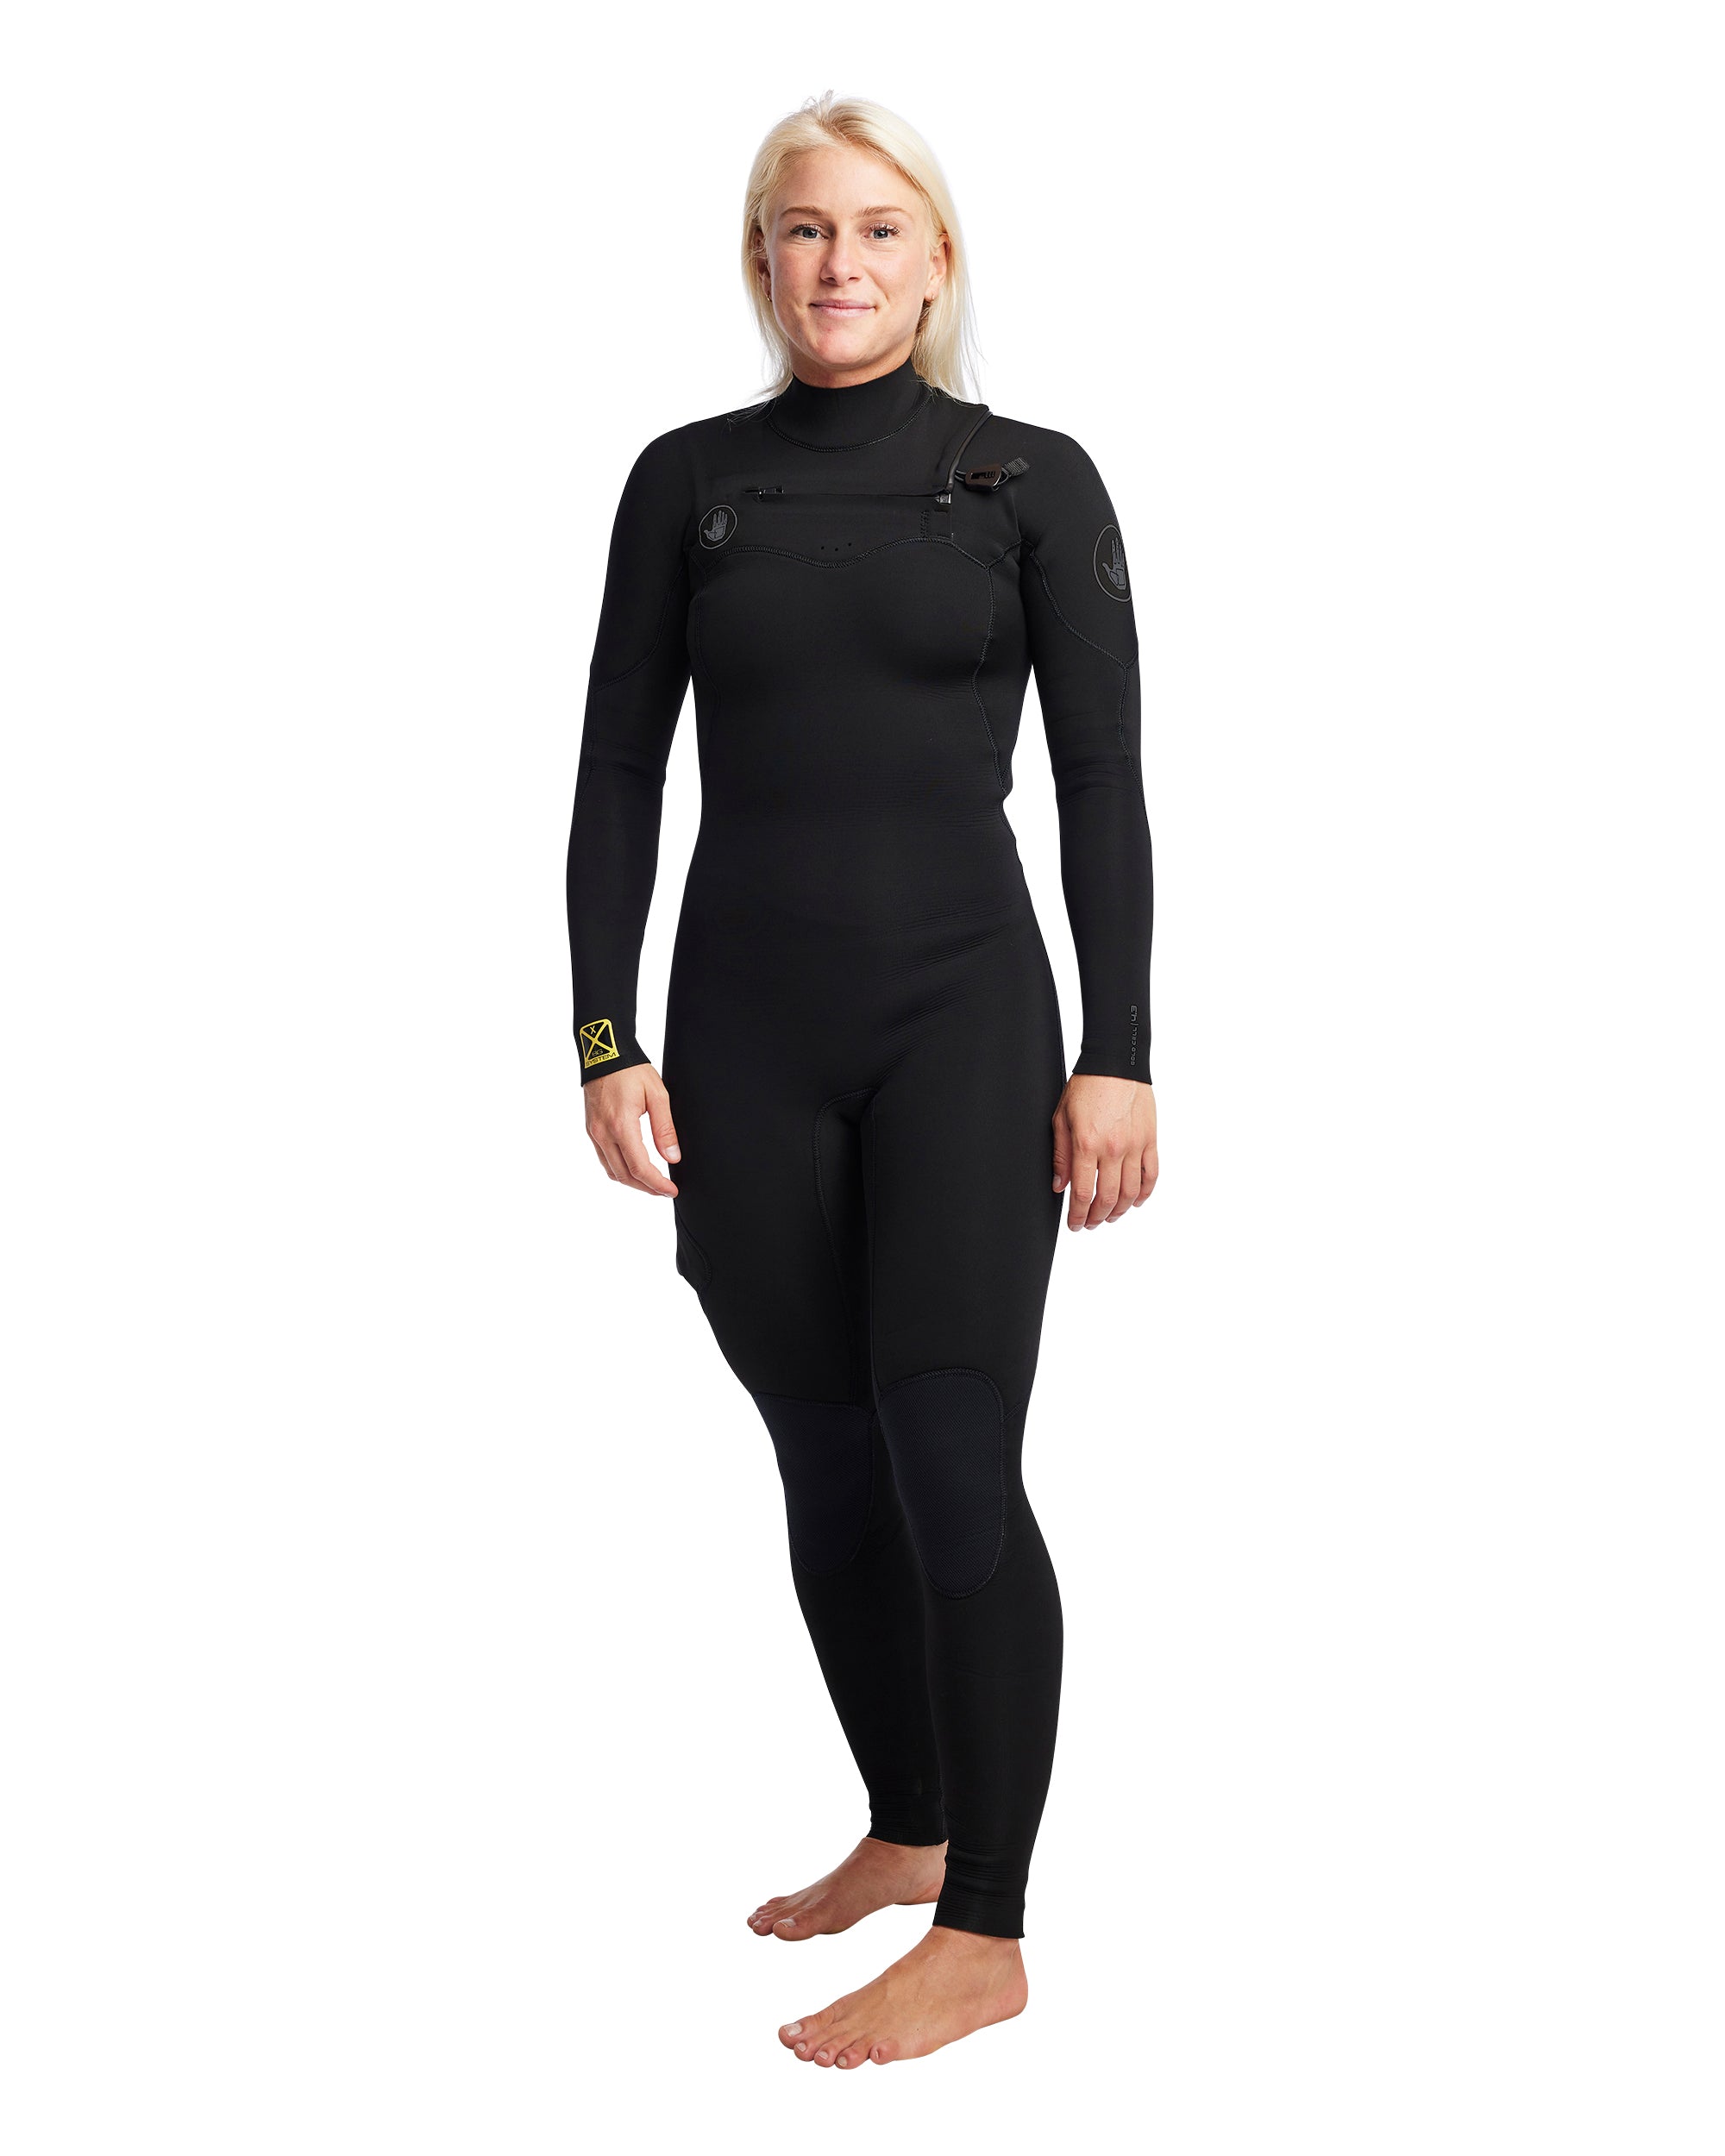 Women's Wetsuits (Full-body, Top & Bottoms)